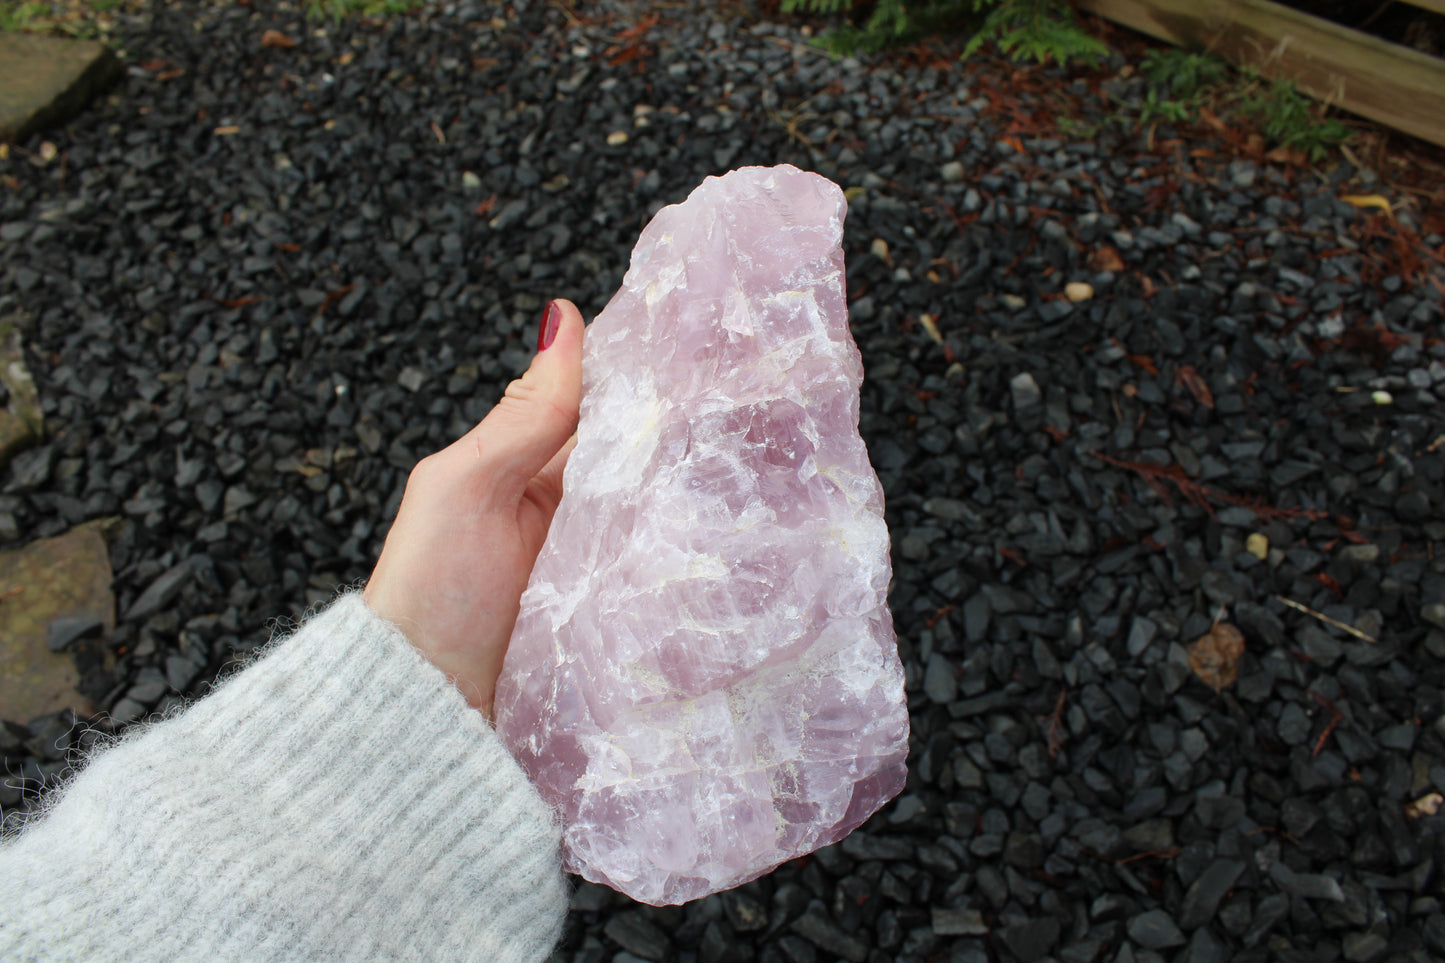 1 morceau brut de quartz rose 1.8 kg